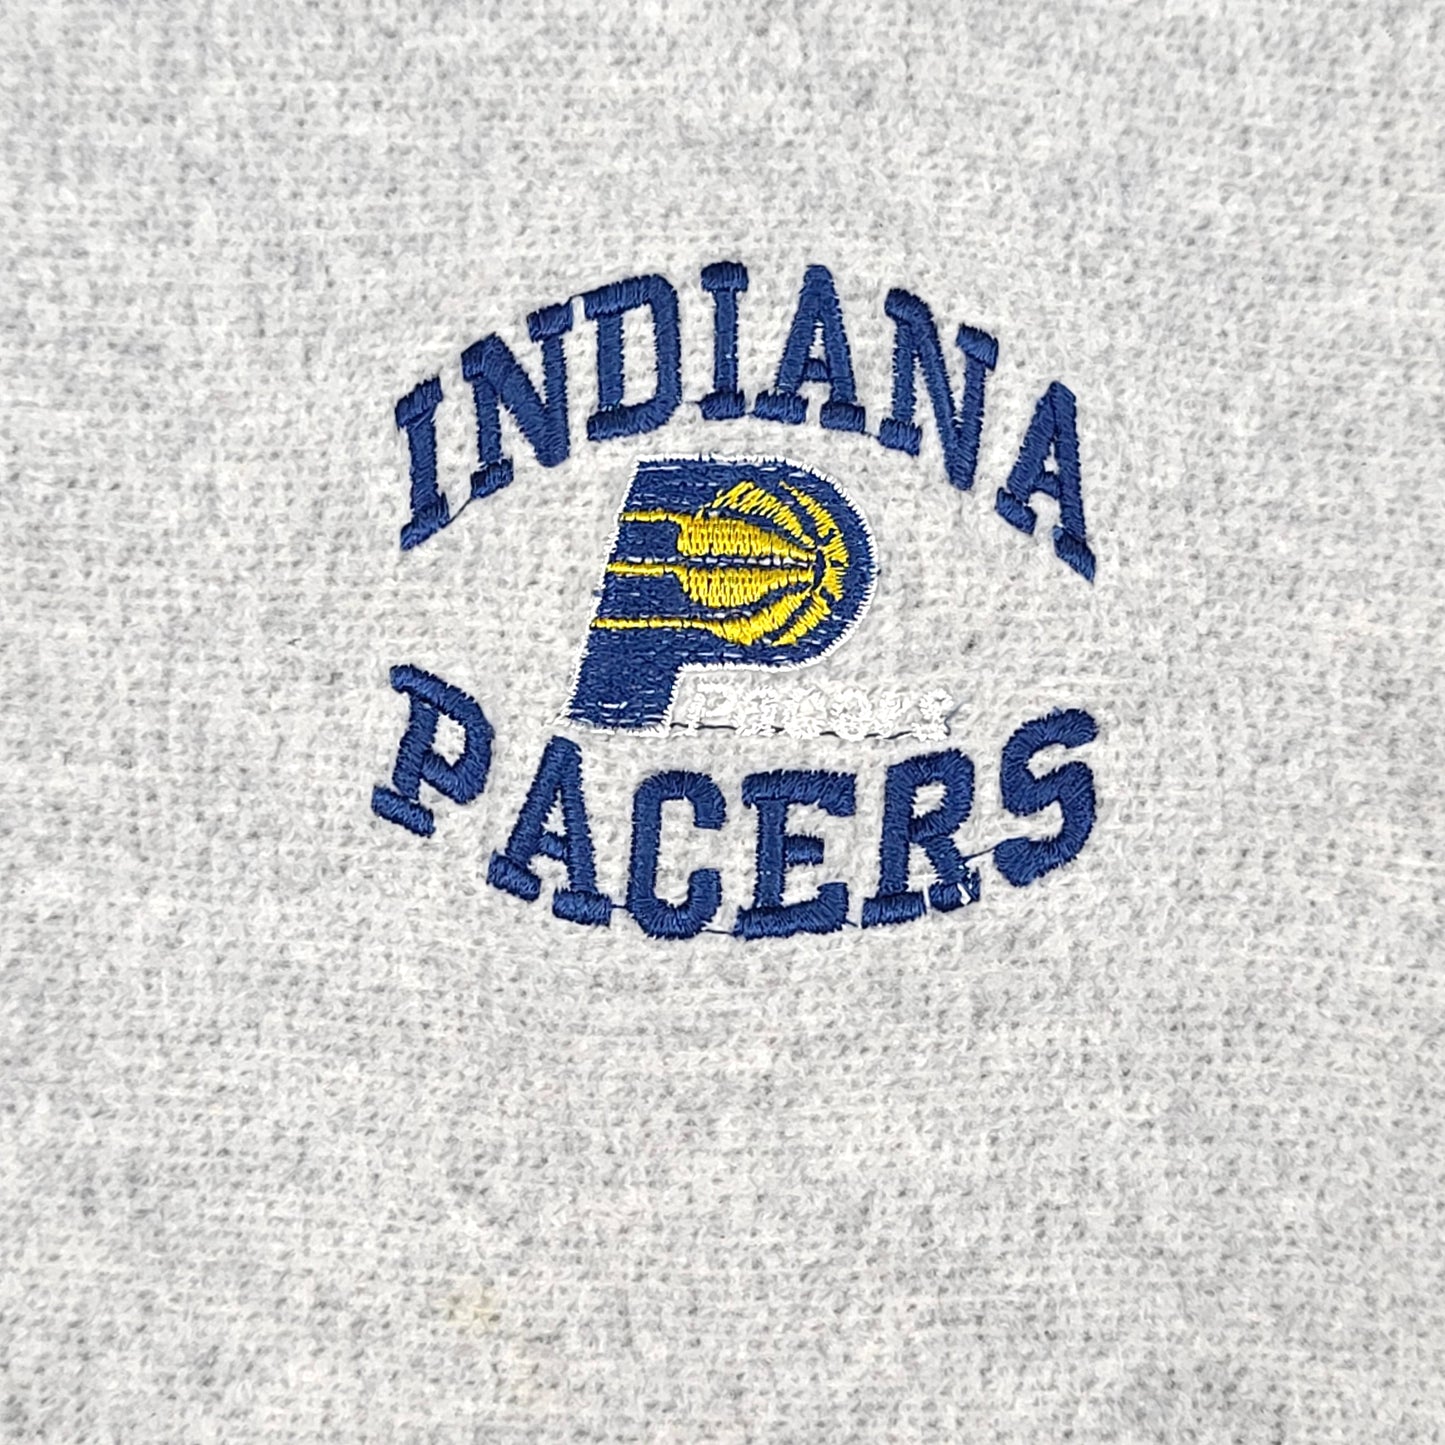 Vintage Indiana Pacers The Edge Reverse Gray Sweatshirt